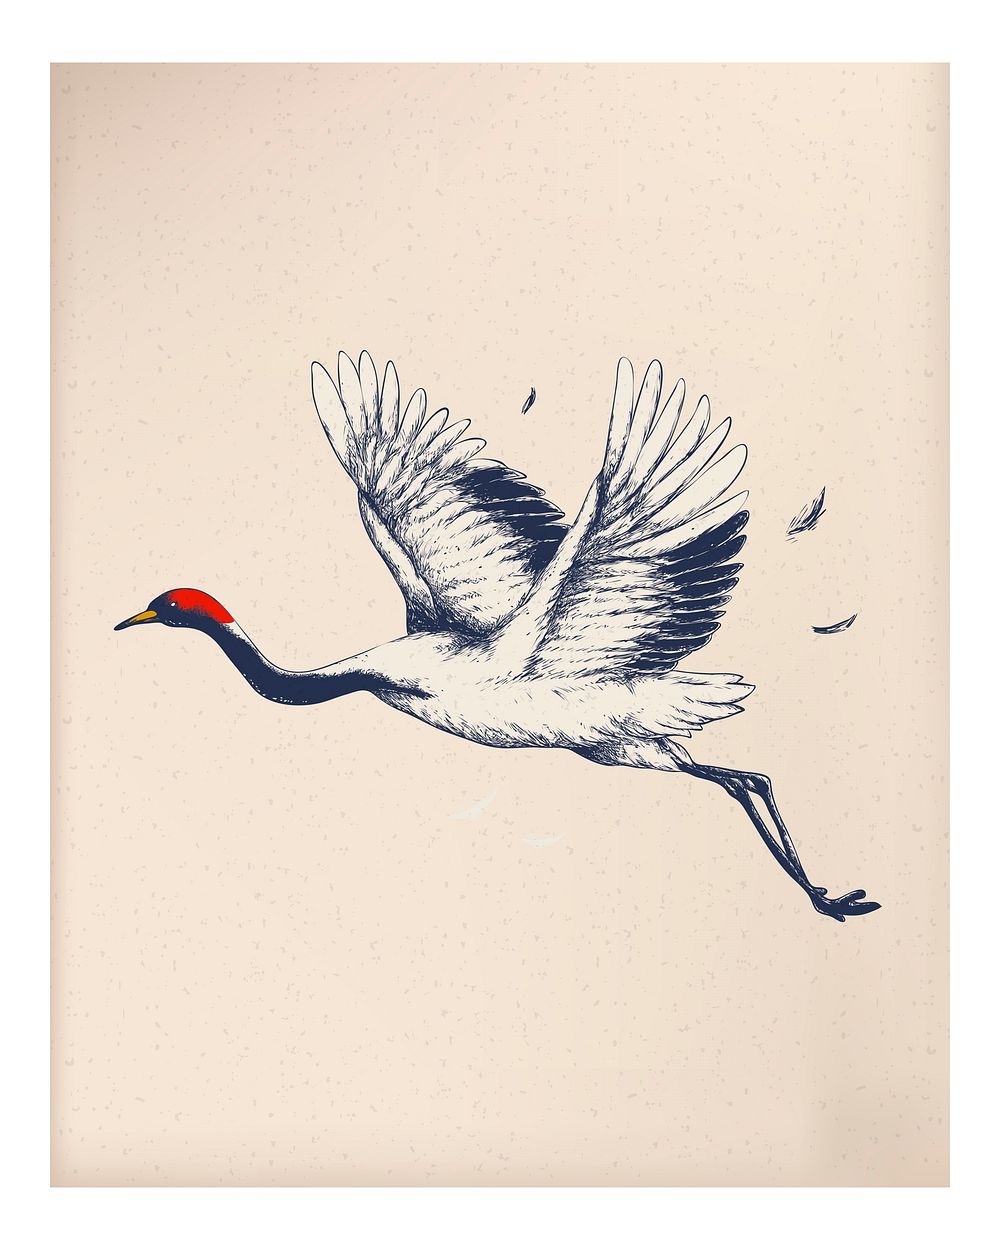 Japanese crane wall art print and poster.